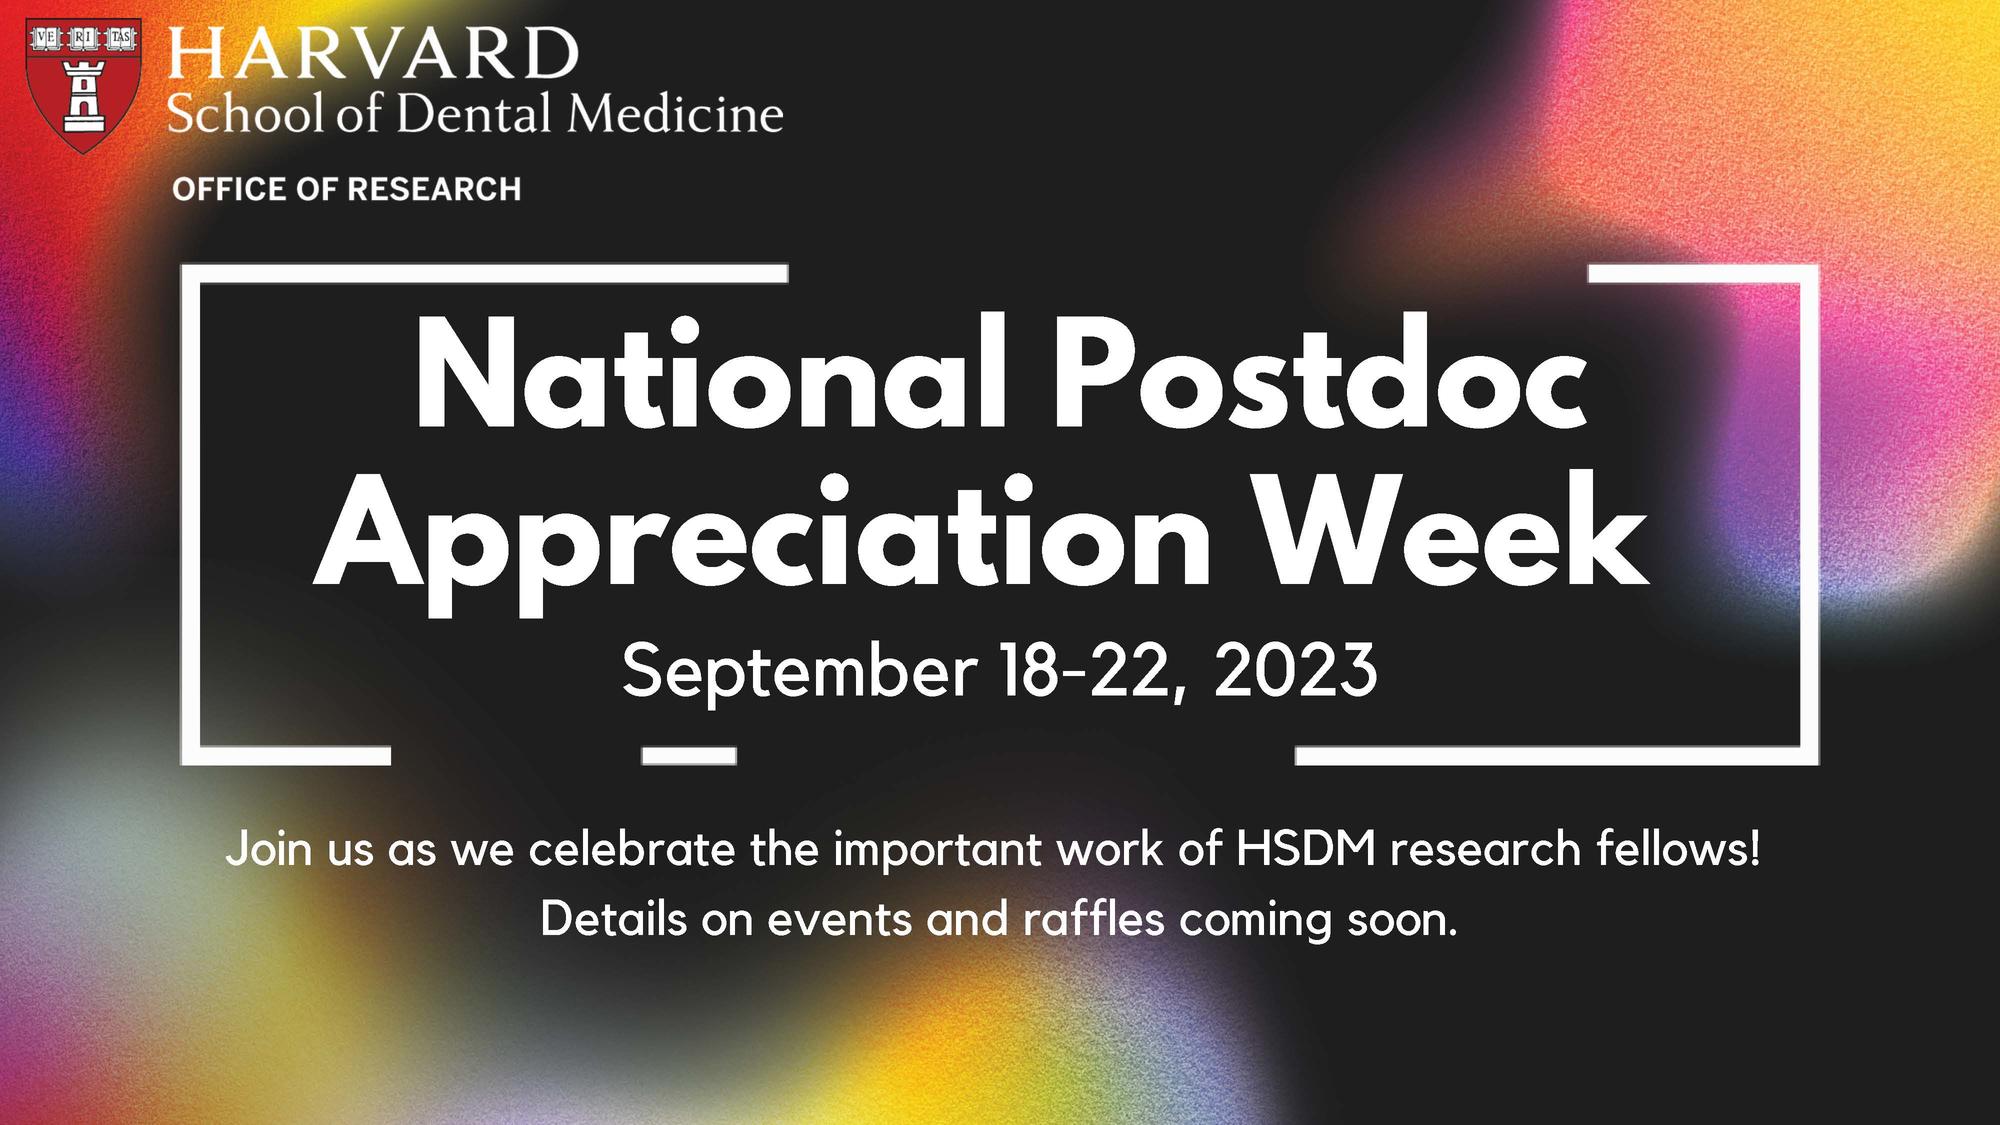 National Postdoc Appreciation Week September 18-22, 2023